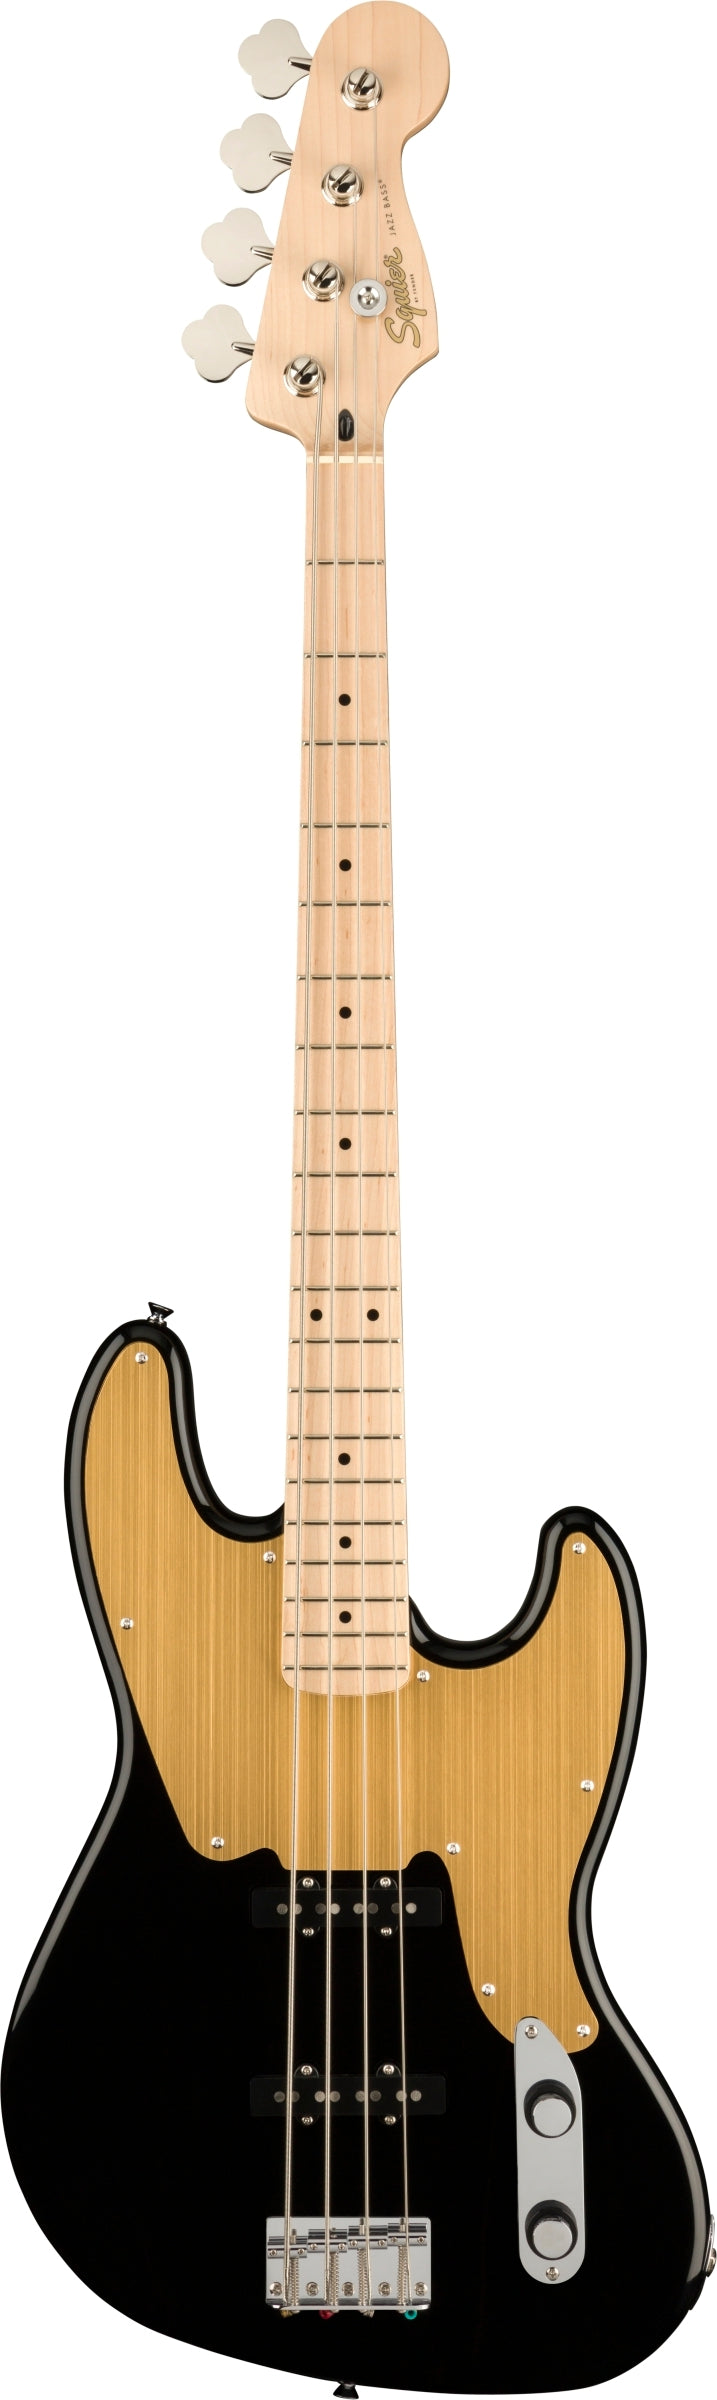 Fender Squier Paranormal Jazz Bass '54, Black